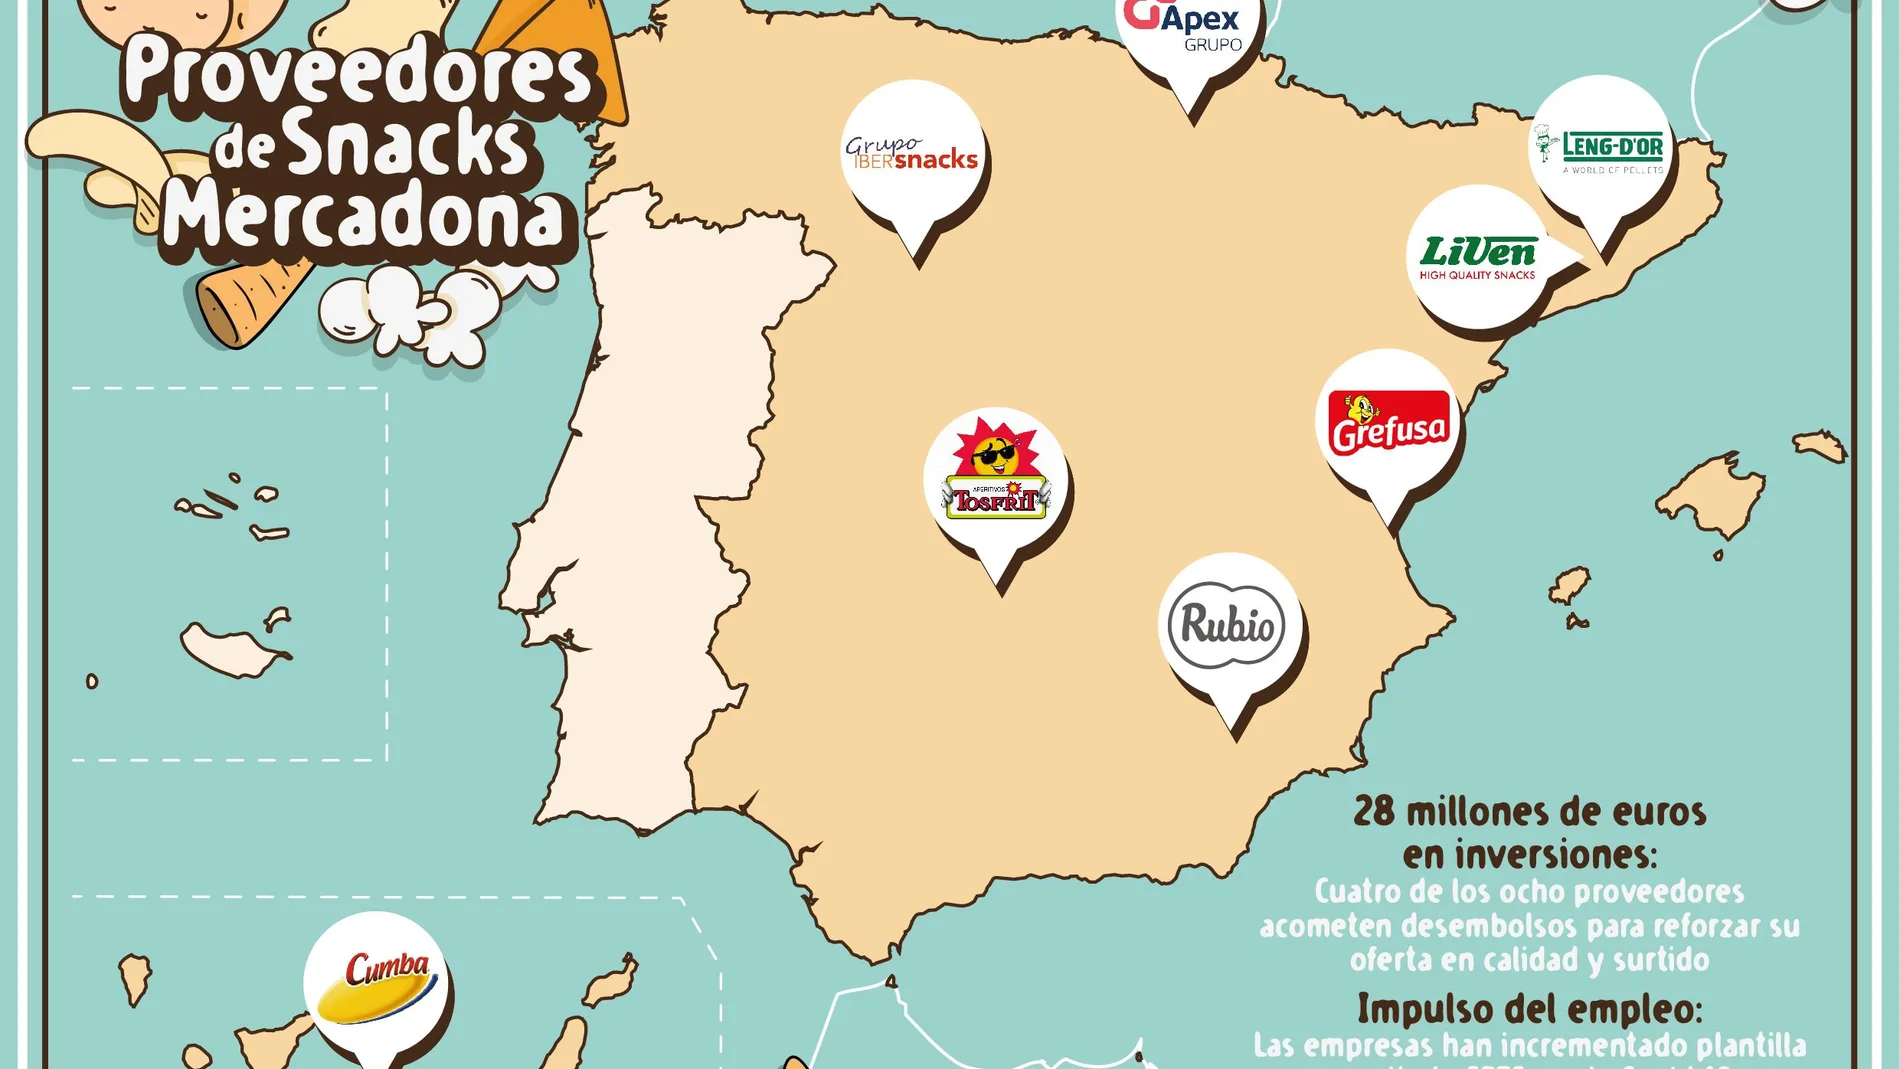 Mapa de proveedores de snacks de Mercadona